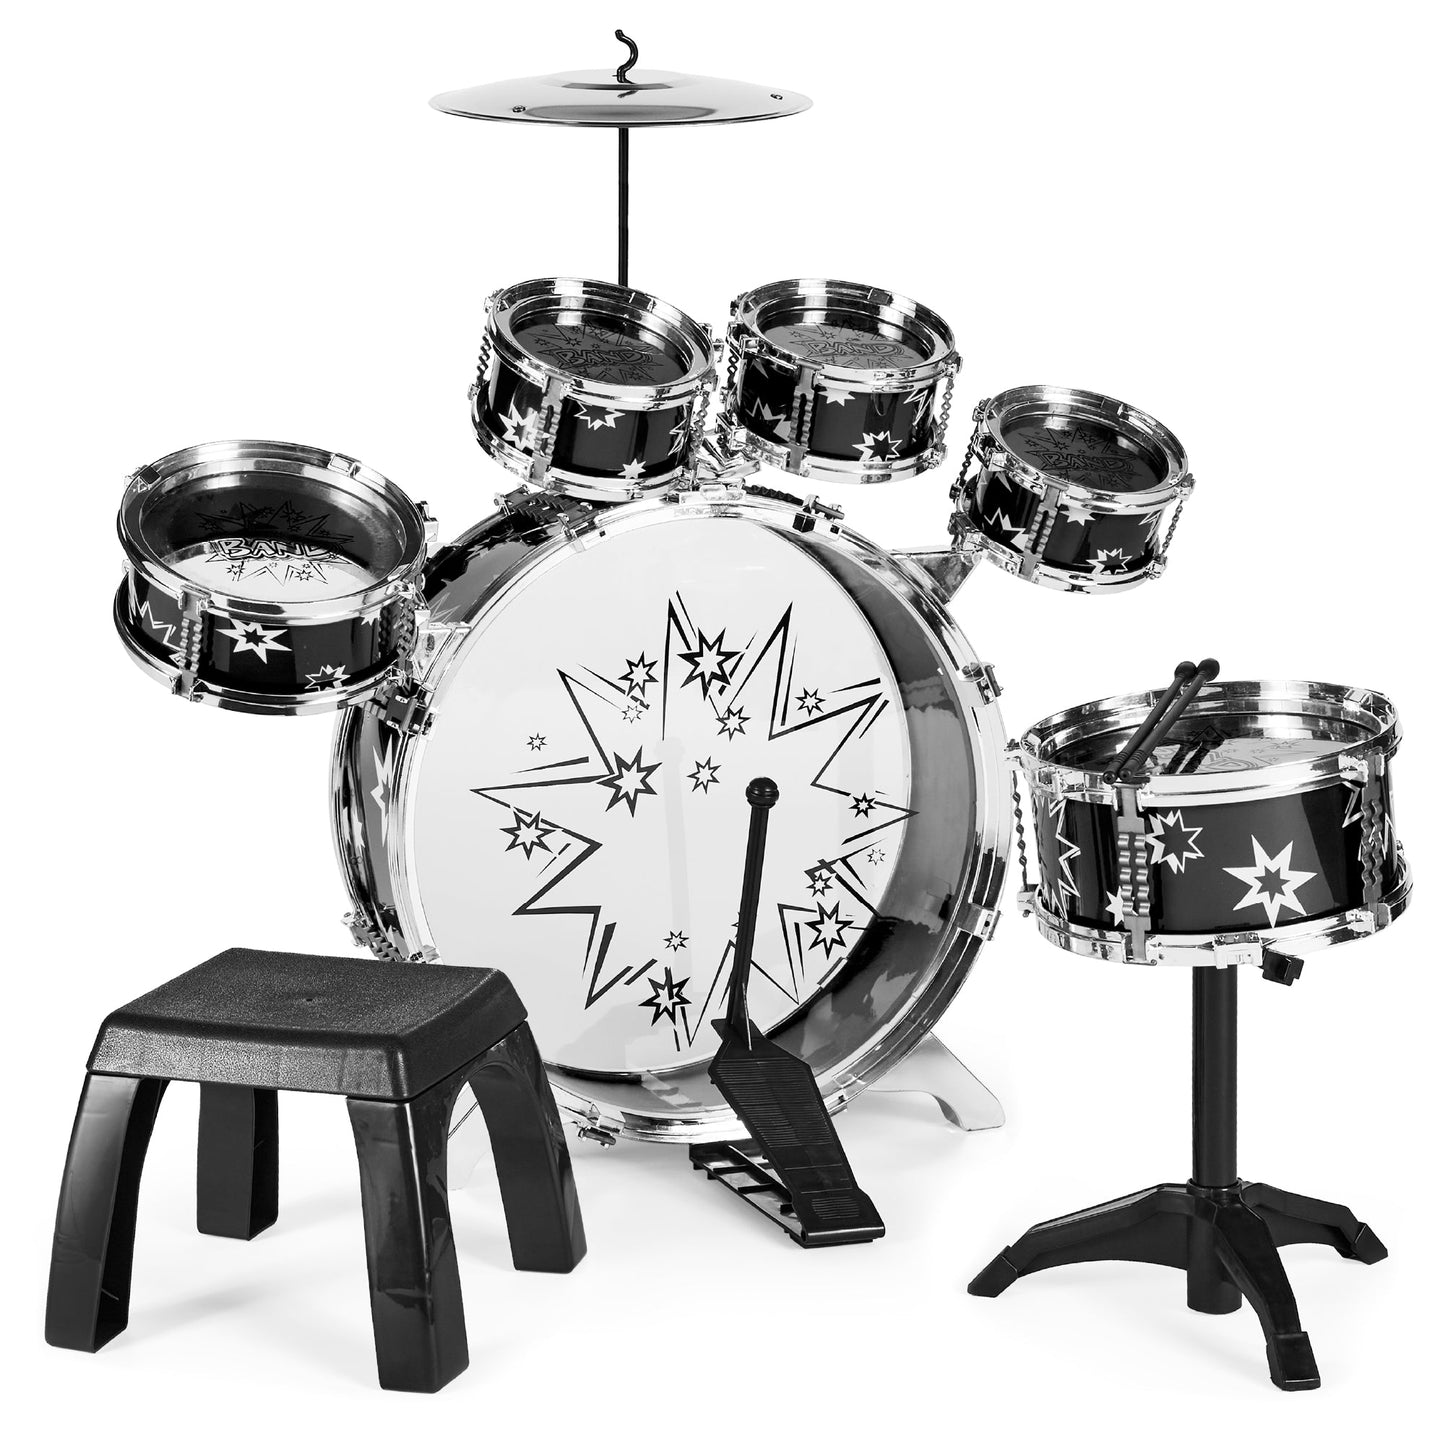 11-Piece Kids Beginner Drum Percussion Musical Instrument Toy Set